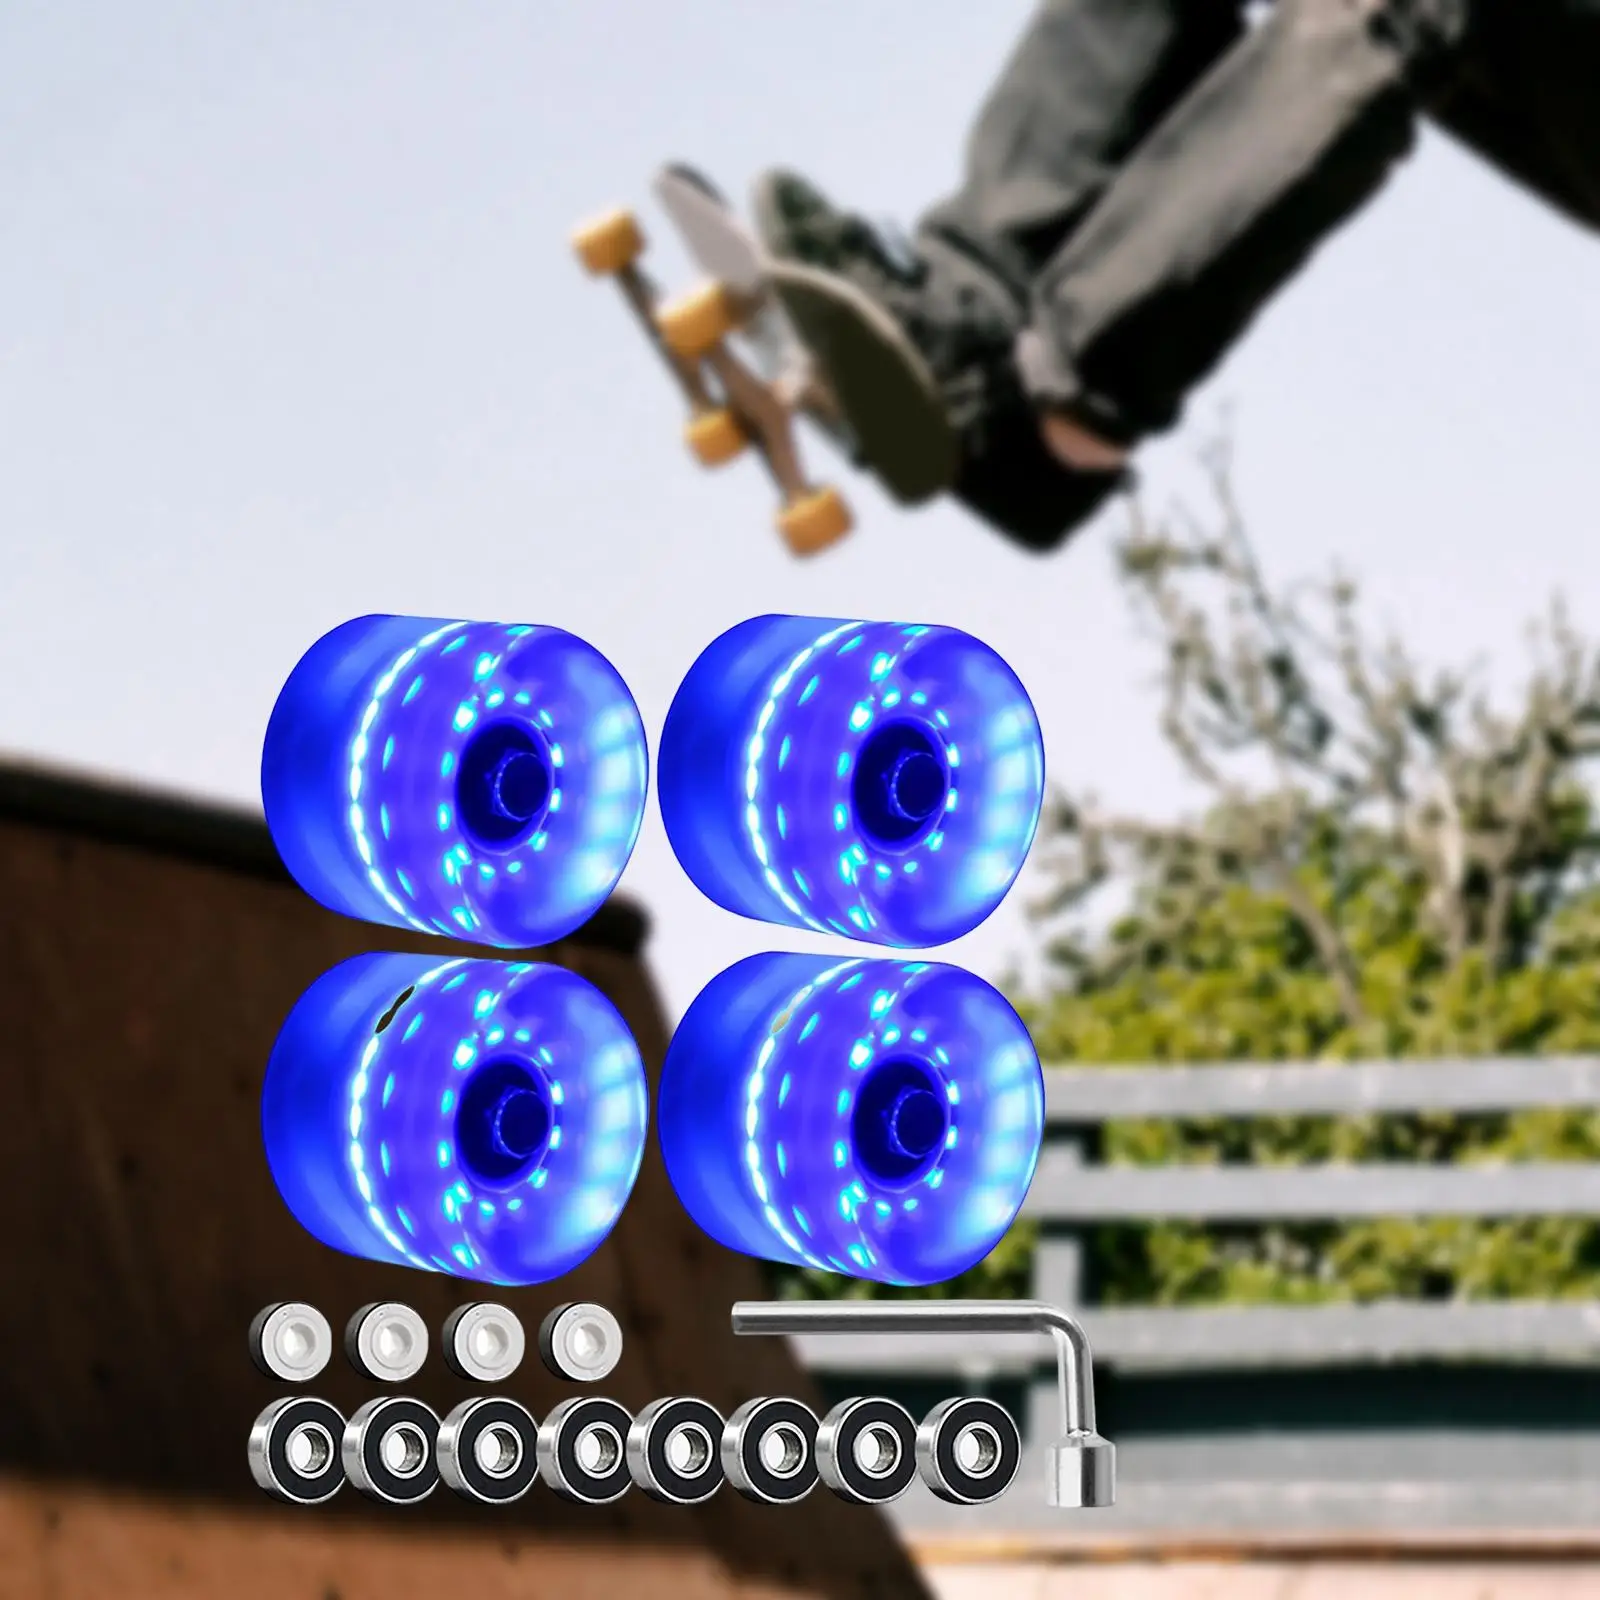 4Pcs Skate Wheel 45mm Double Row Skating Roller Skate Wheels for Outdoor